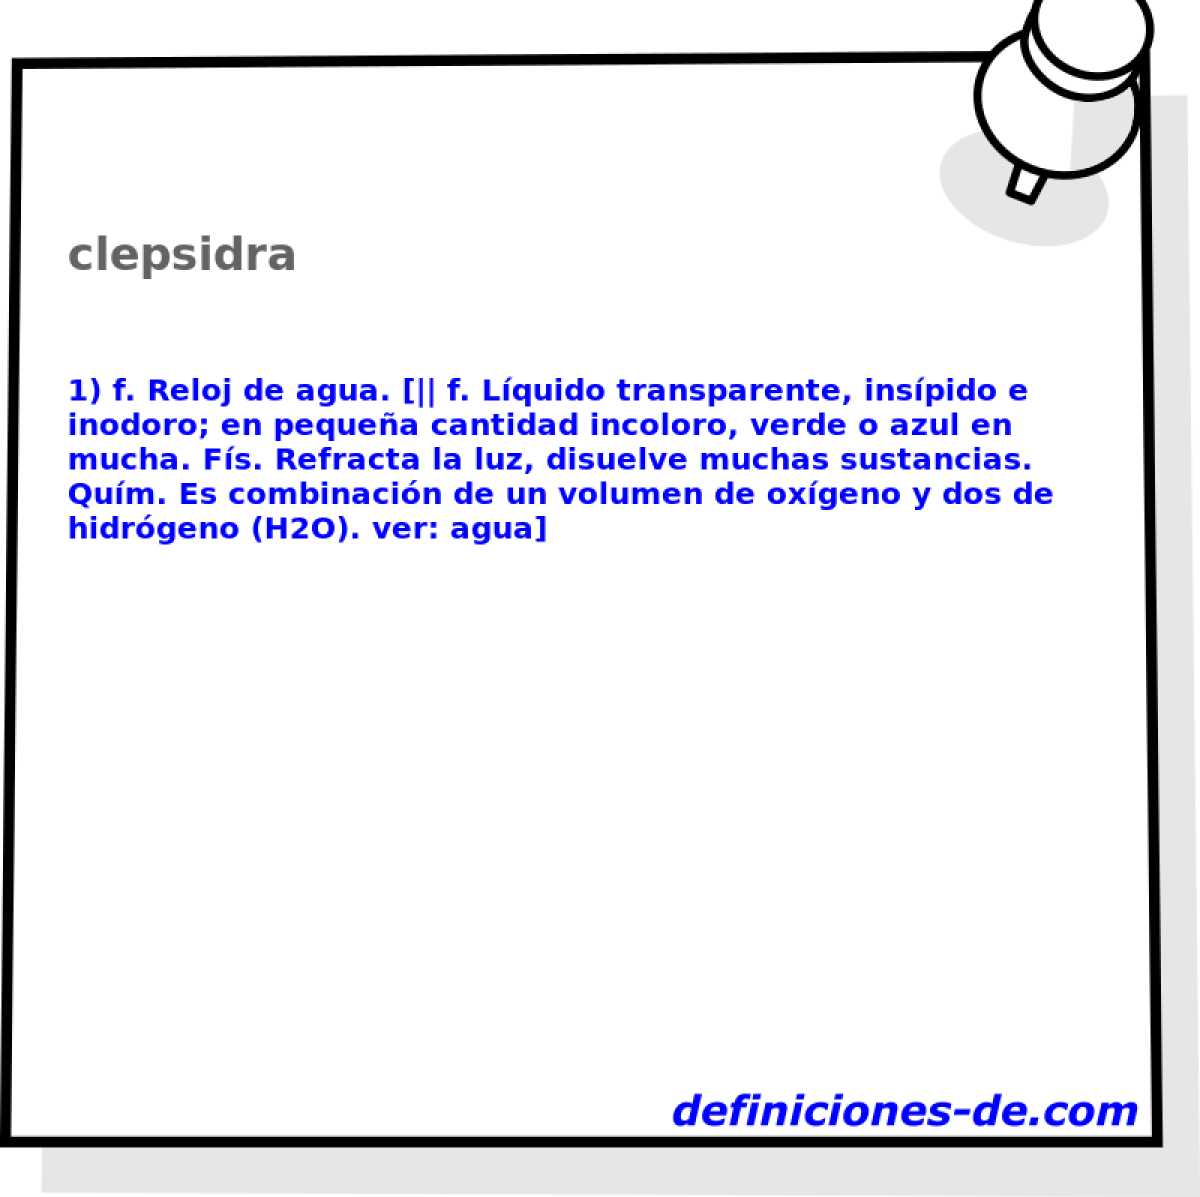 clepsidra 